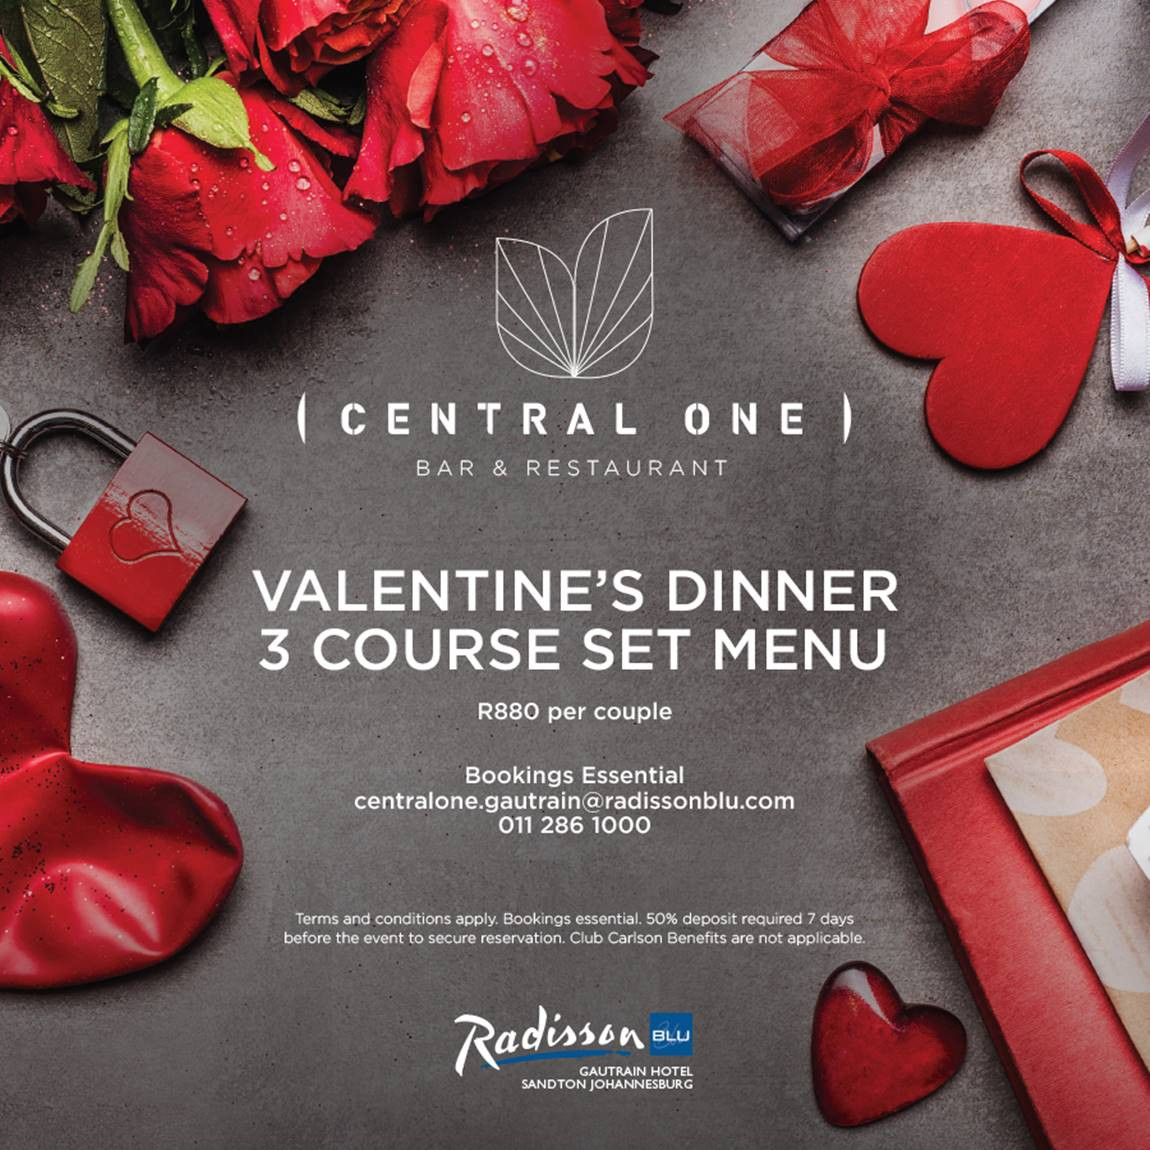 Valentines Day Dinner Restaurants
 Valentines Day Dinner at Central e Restaurant